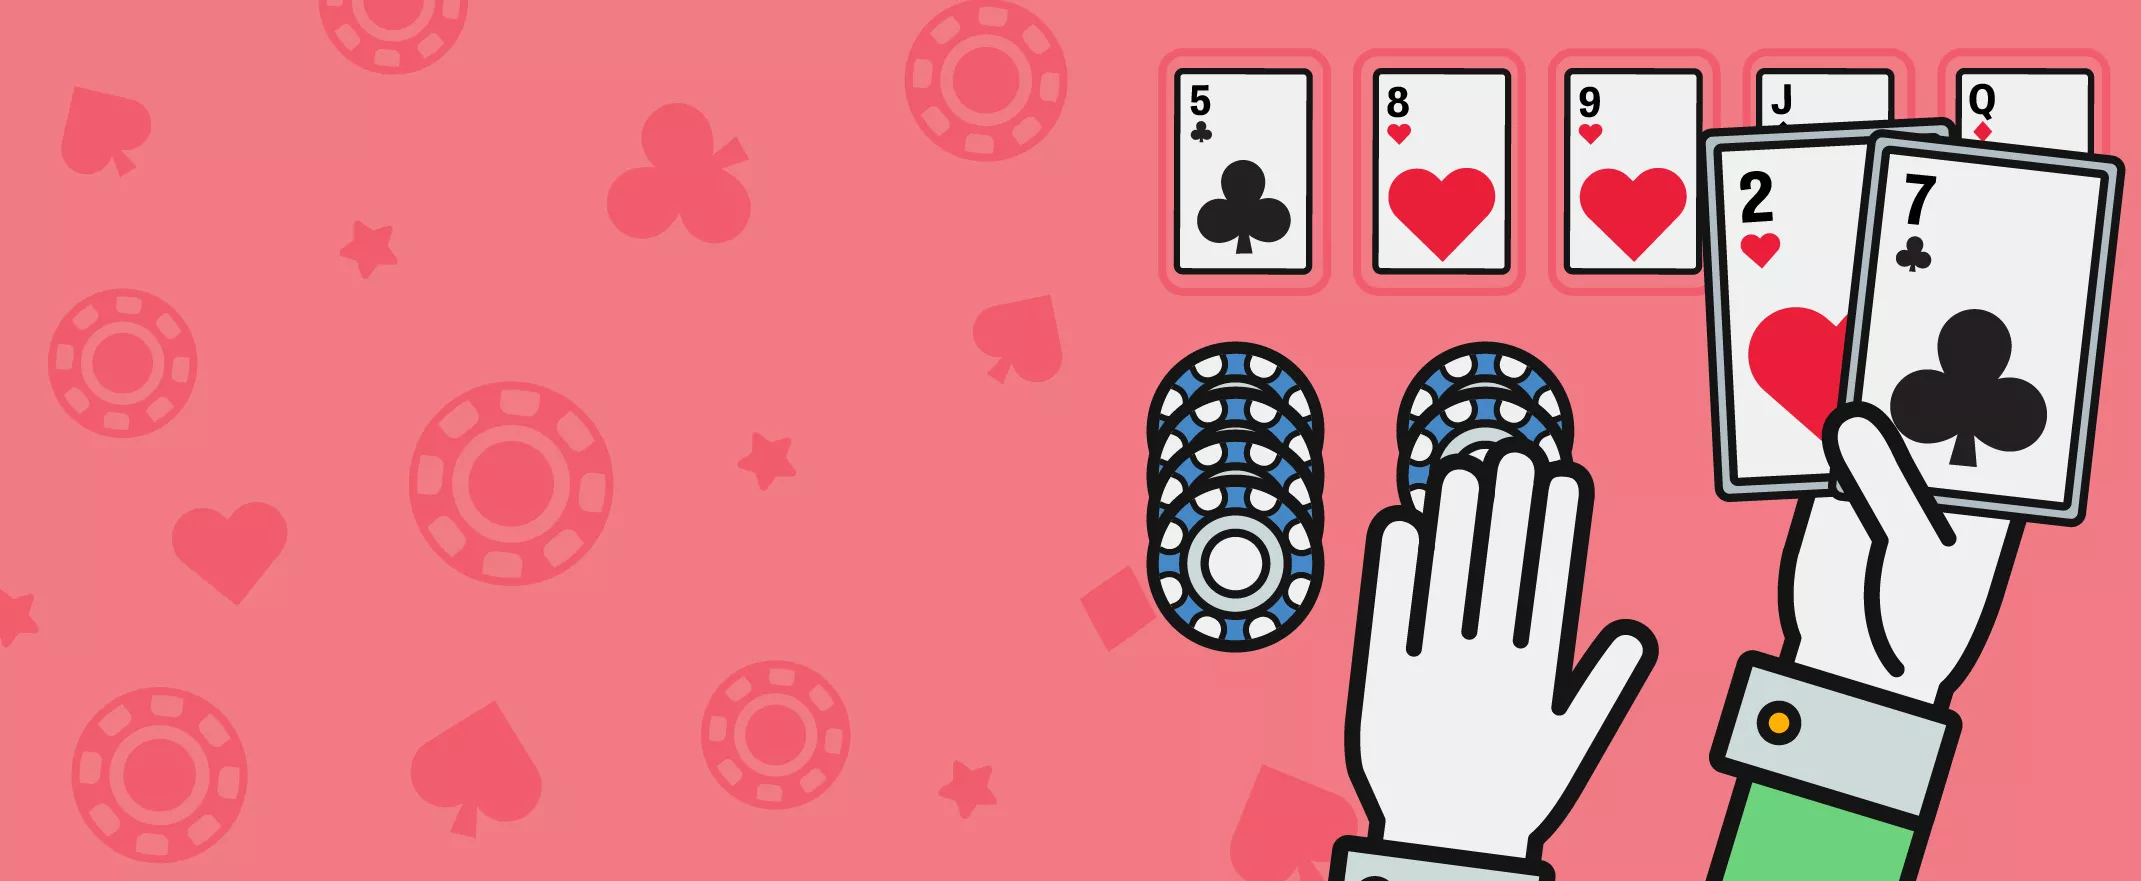 Basic poker strategy for beginners - Starting hands (preflop)